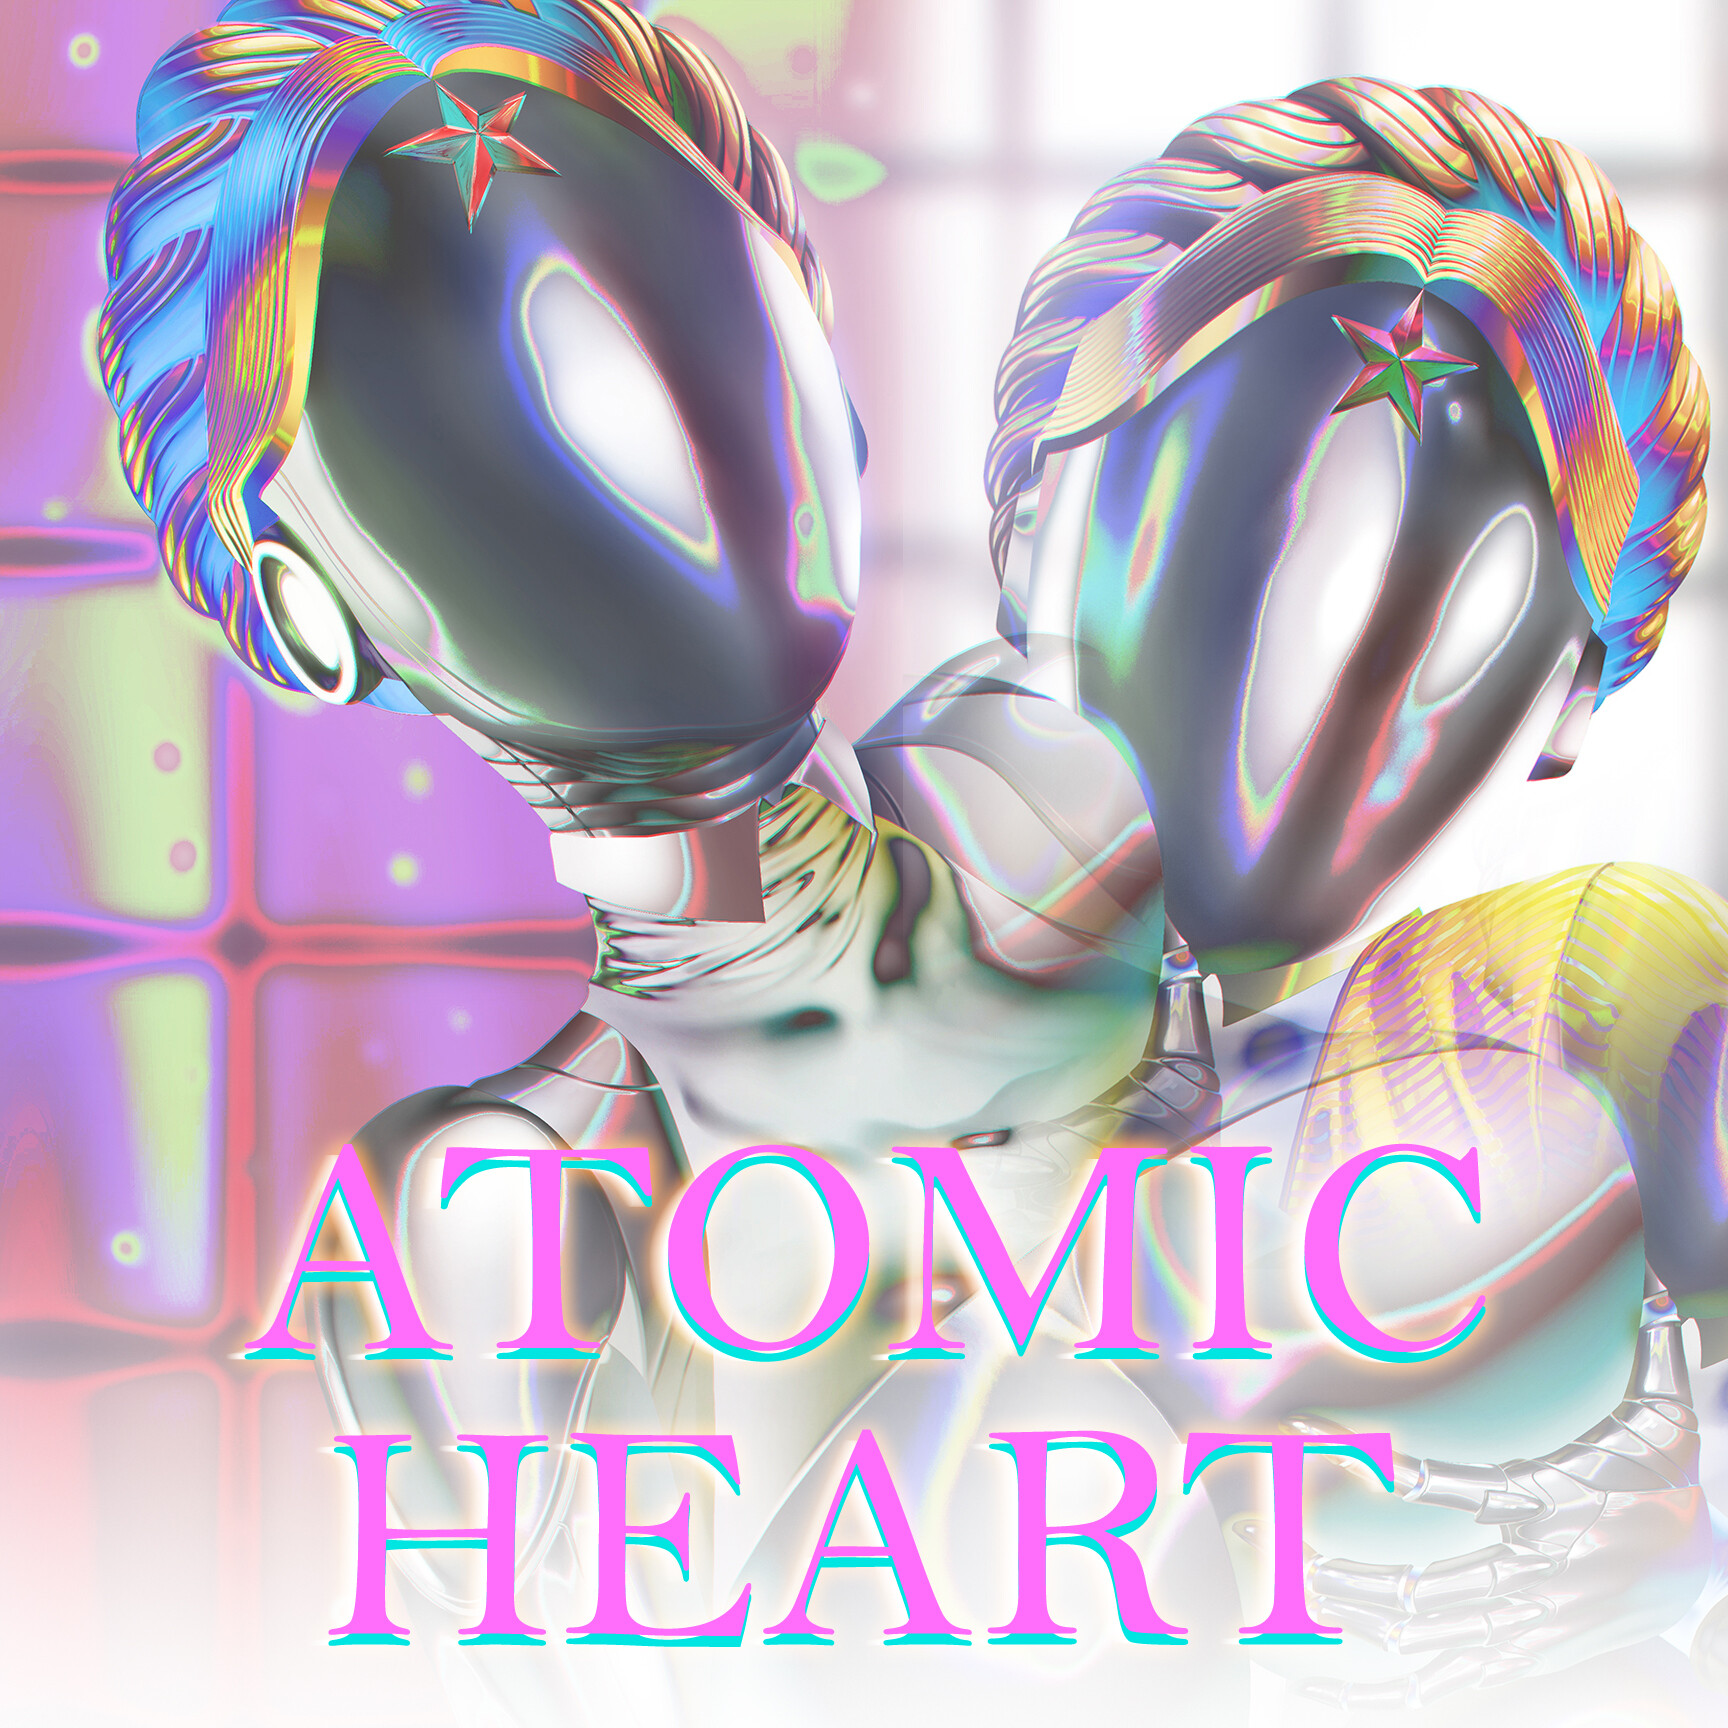 ArtStation - Robot from atomic heart